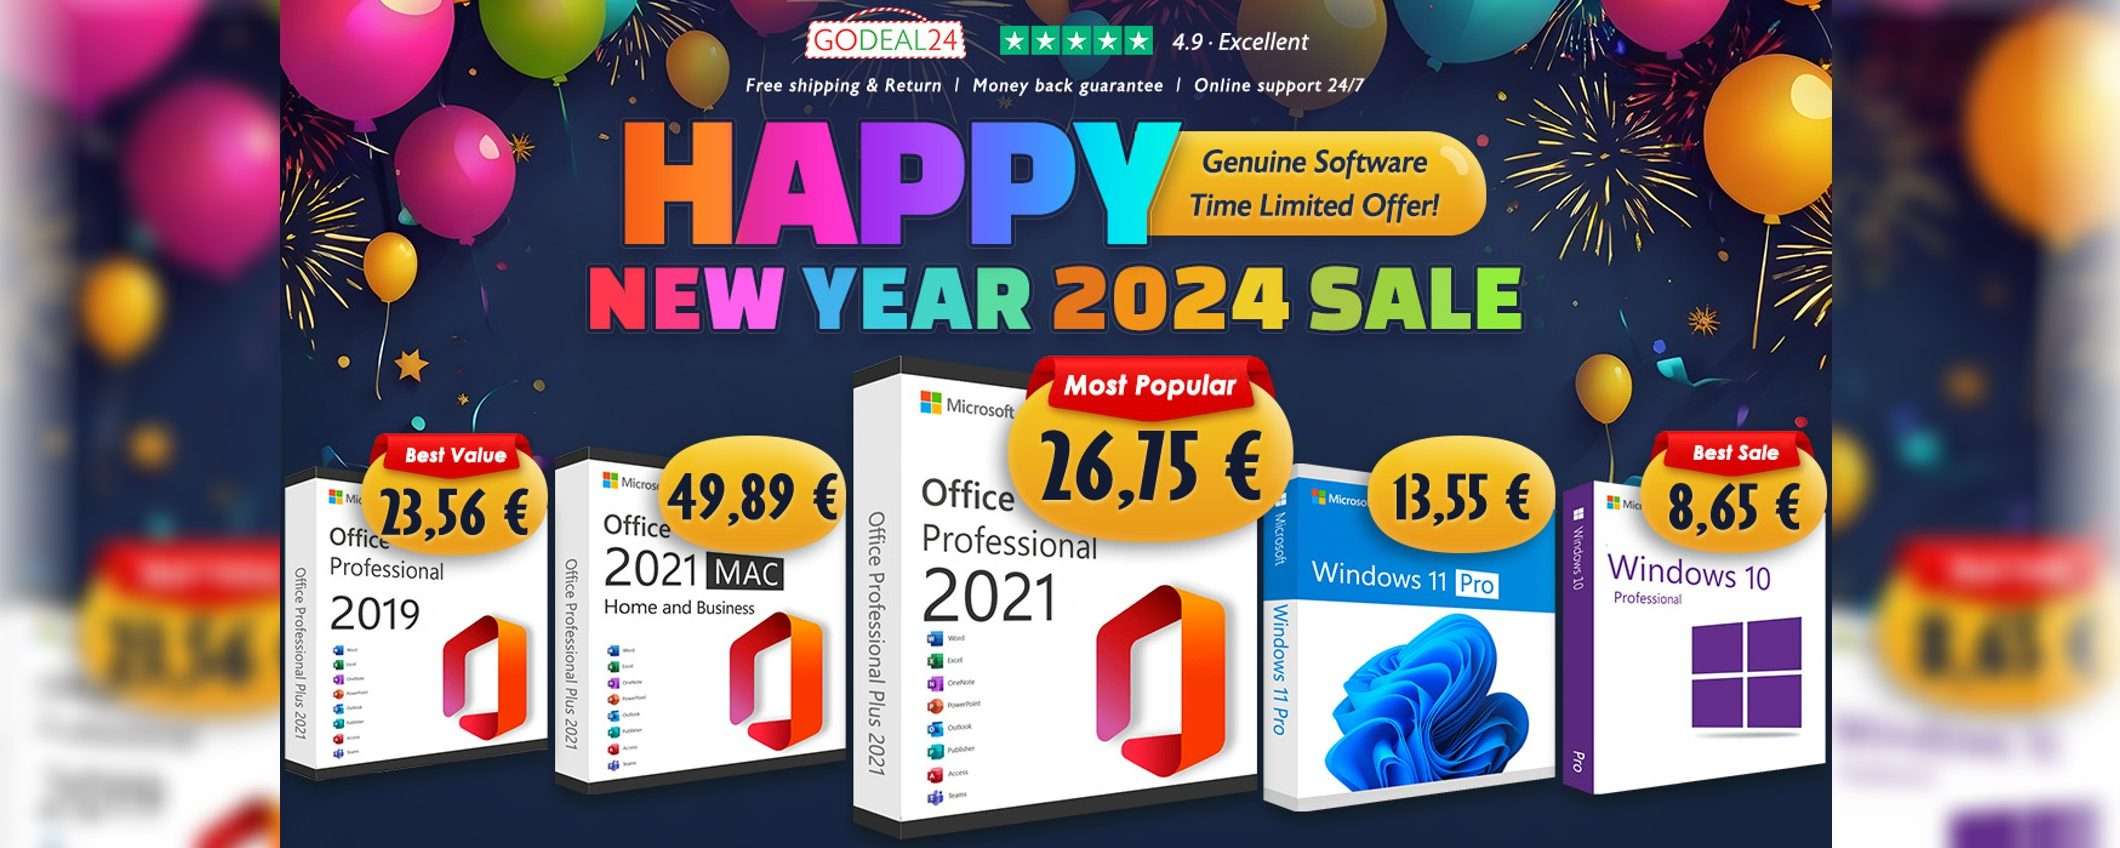 Licenze software, offerte a scadenza: Office 2021 Pro e Windows 11 Pro -62%